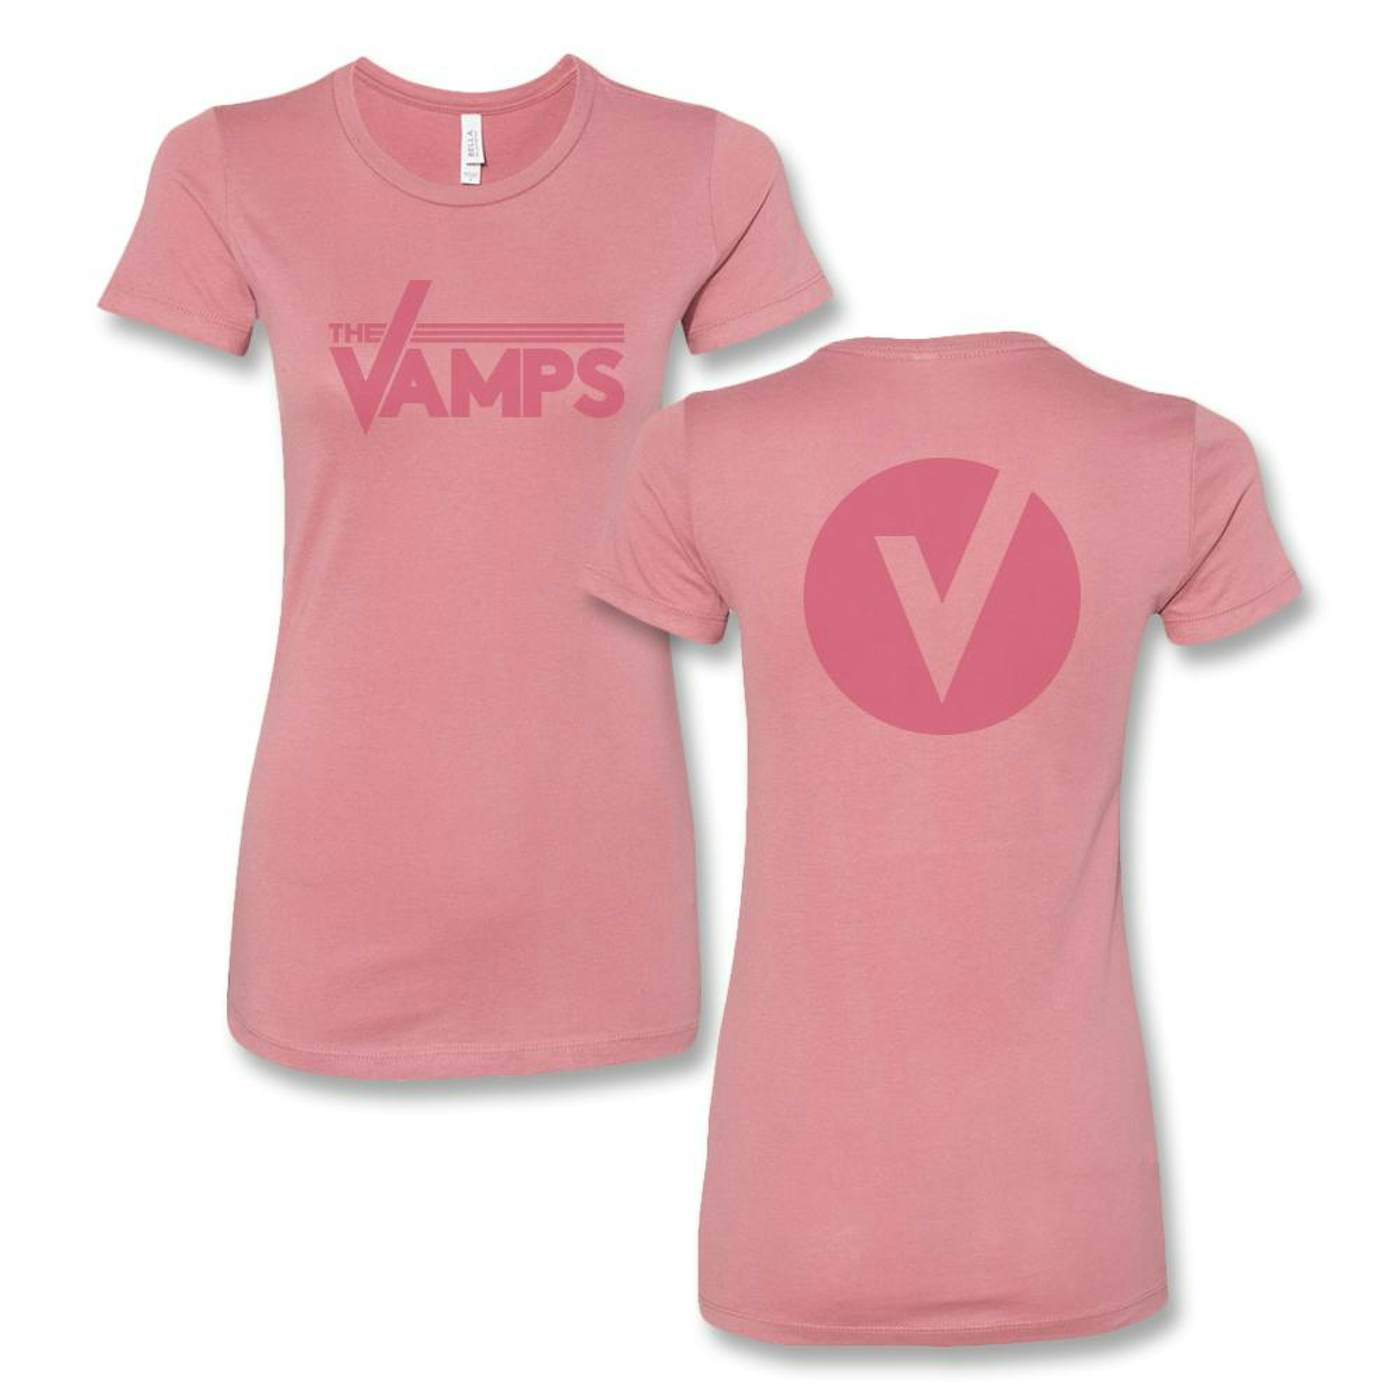 The Vamps Logo T-Shirt - Women's